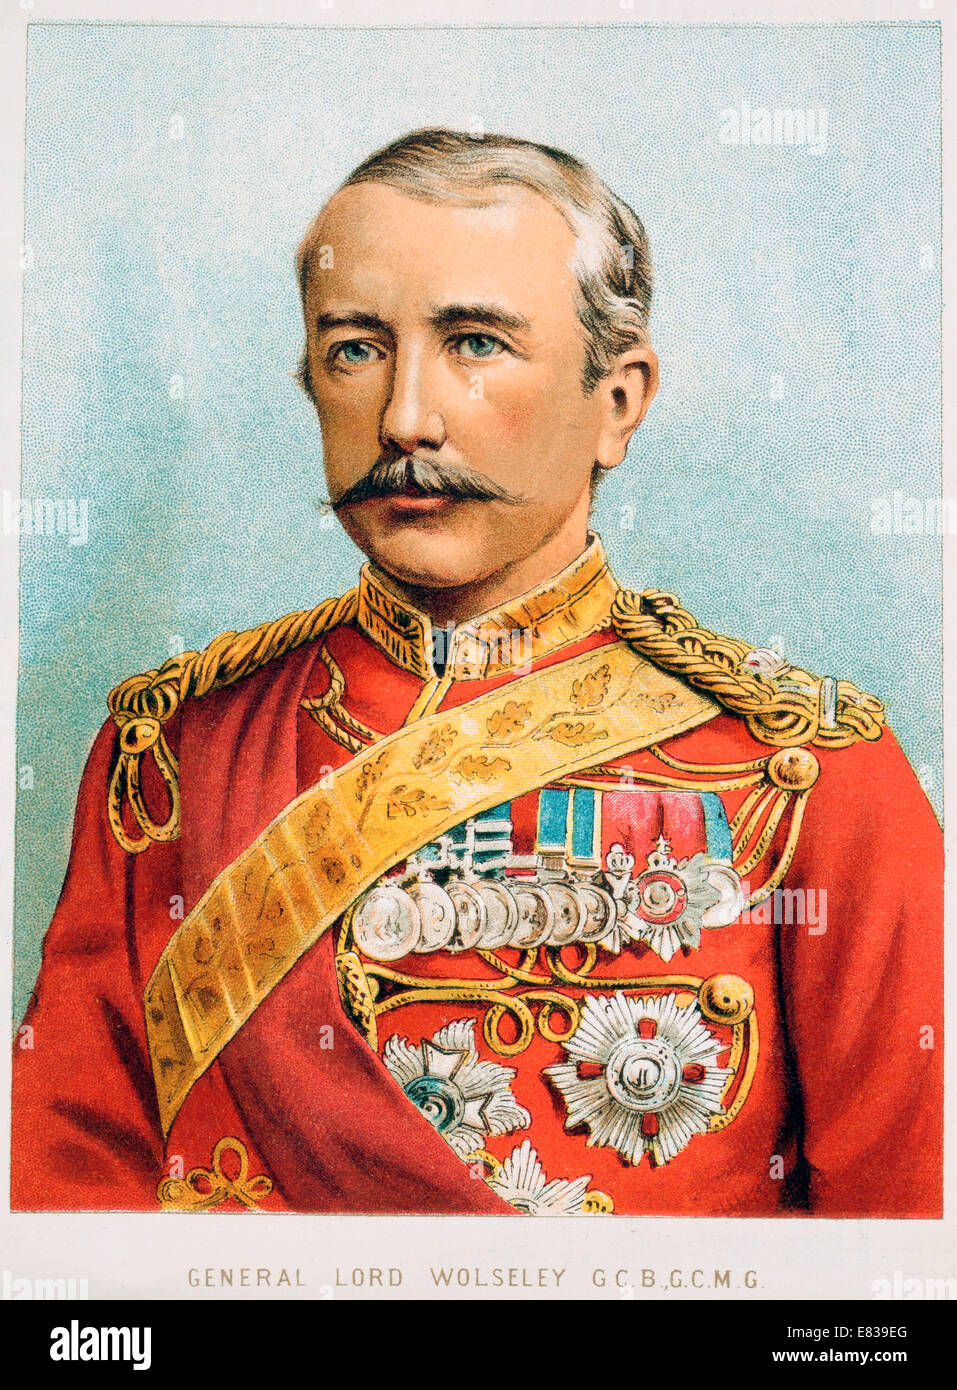 Lithograph General Lord Sir Garnet Wolseley G C B G C M G circa 1885 Stock Photo